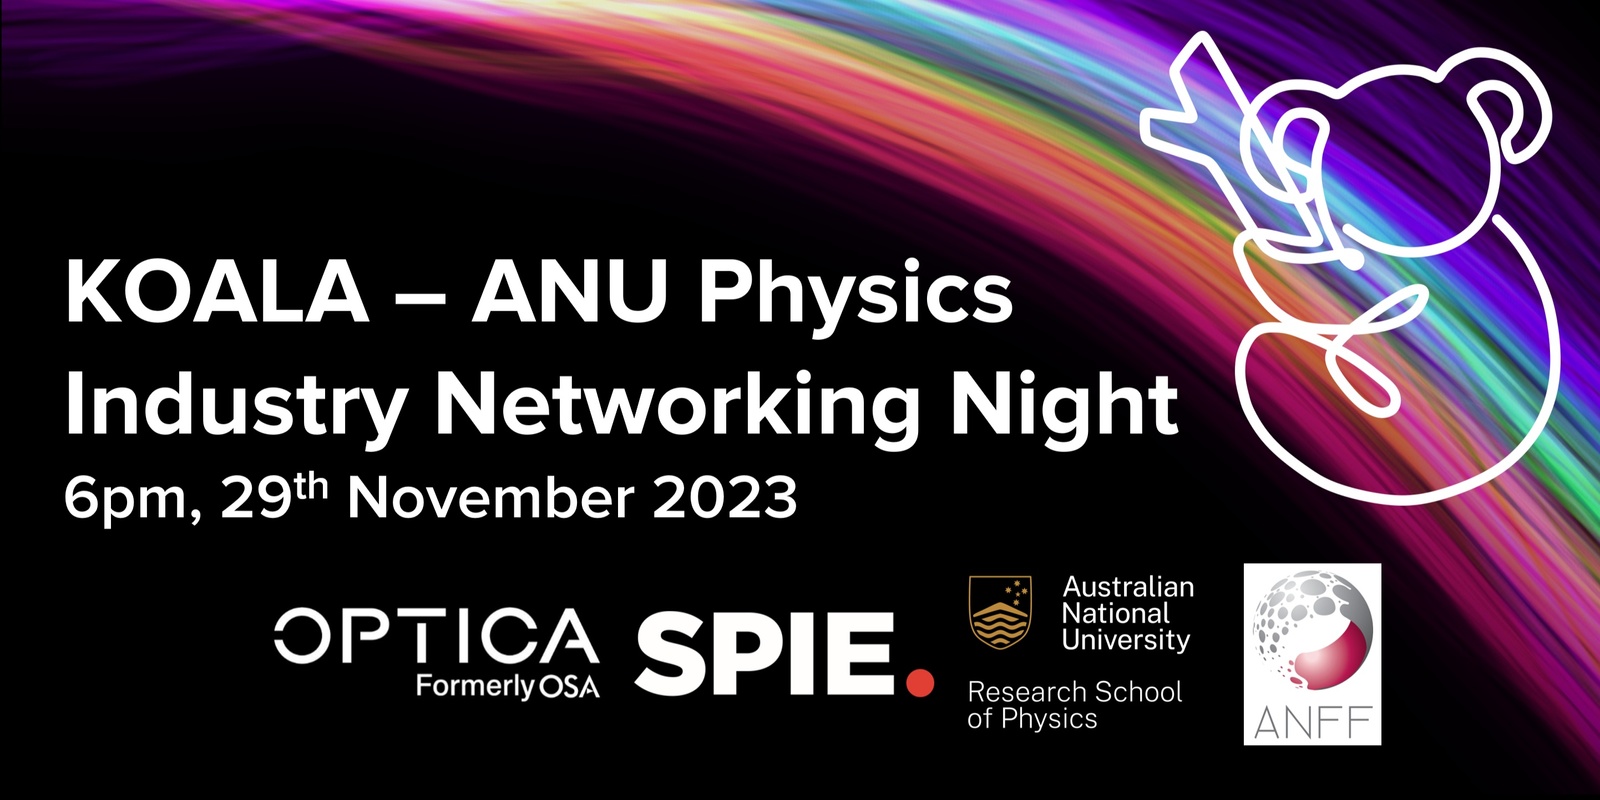 Banner image for KOALA - ANU Physics Industry Night 2023